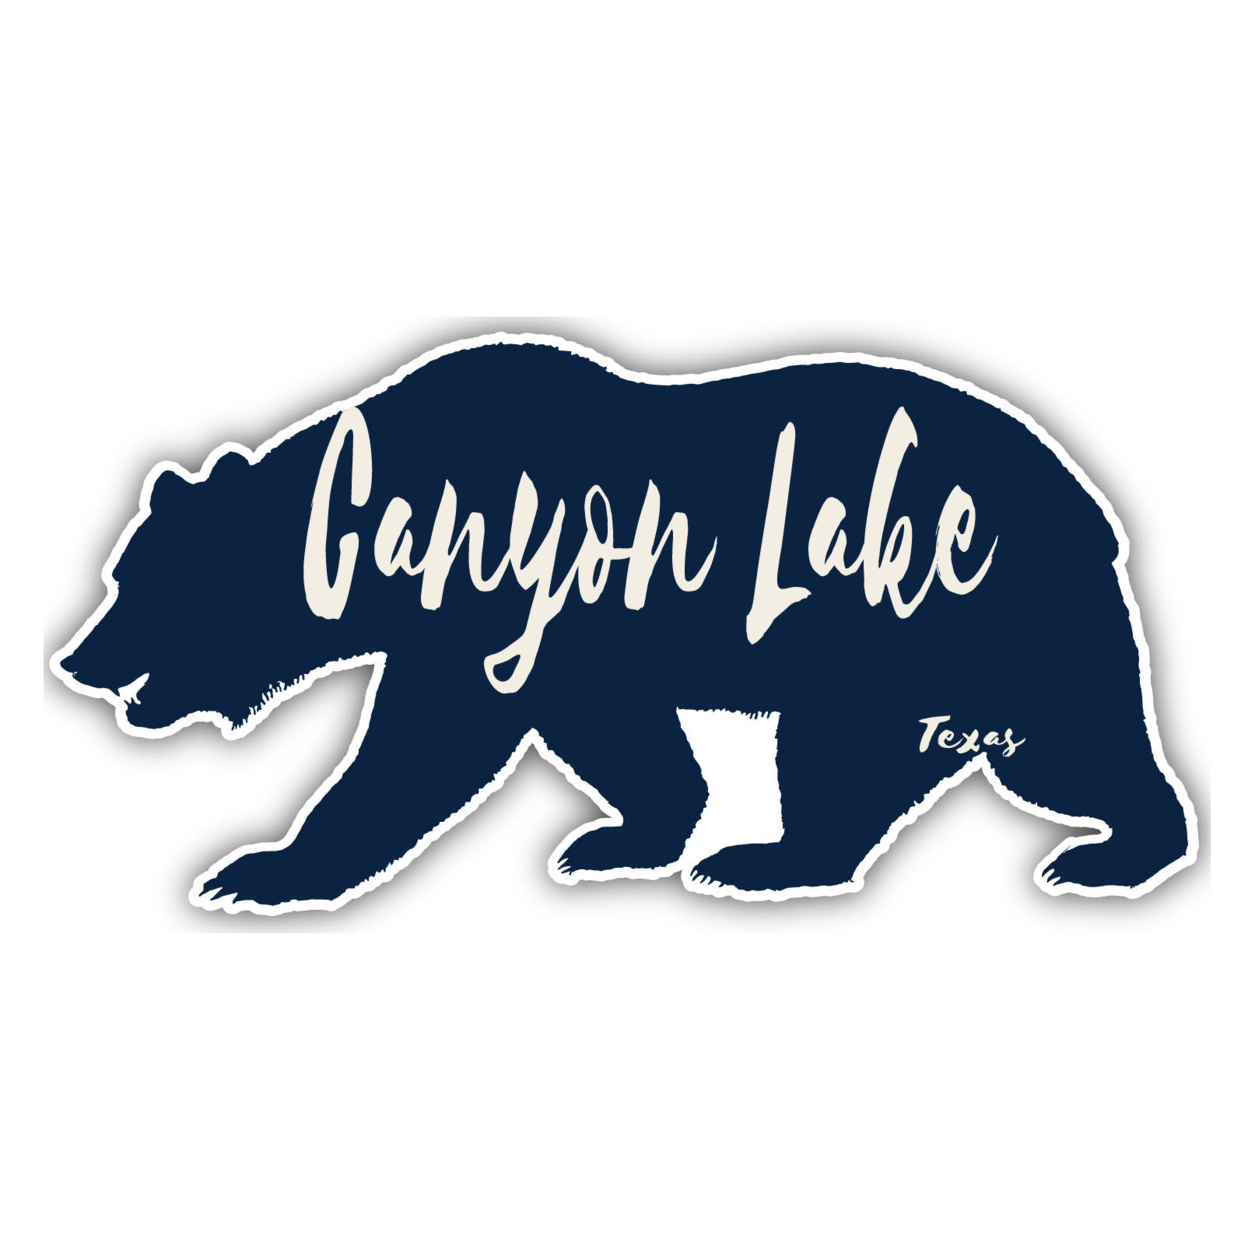 Canyon Lake Texas Souvenir Decorative Stickers (Choose Theme And Size) - 4-Pack, 2-Inch, Bear